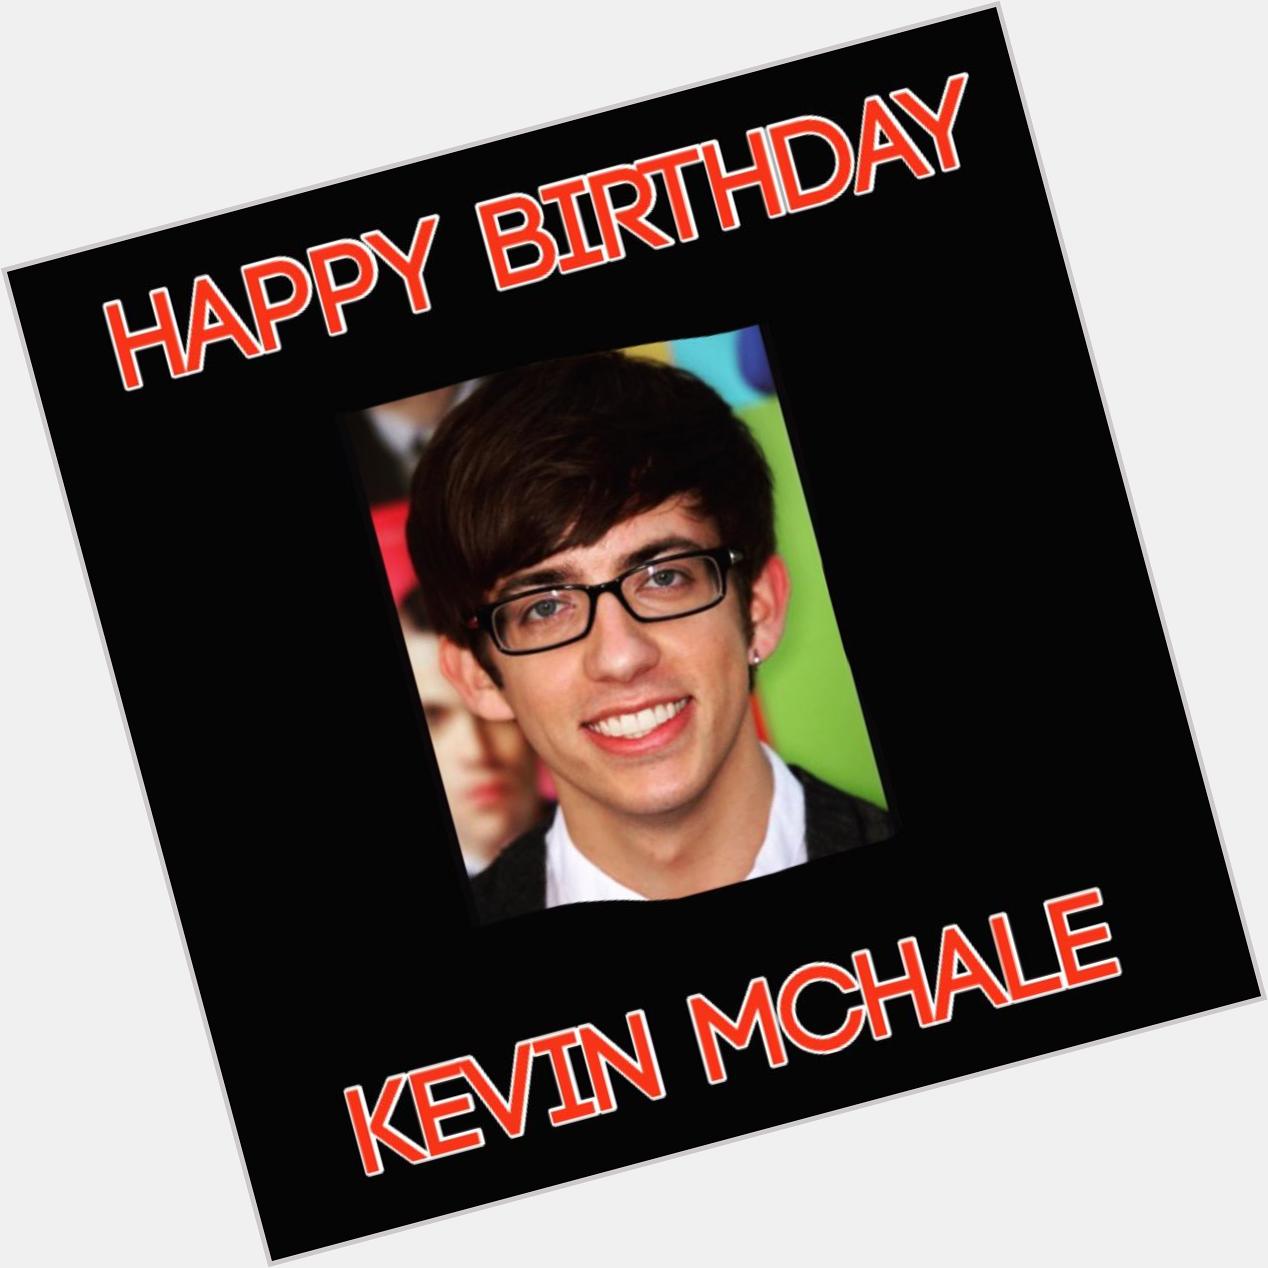 Happy Birthday Kevin McHale  